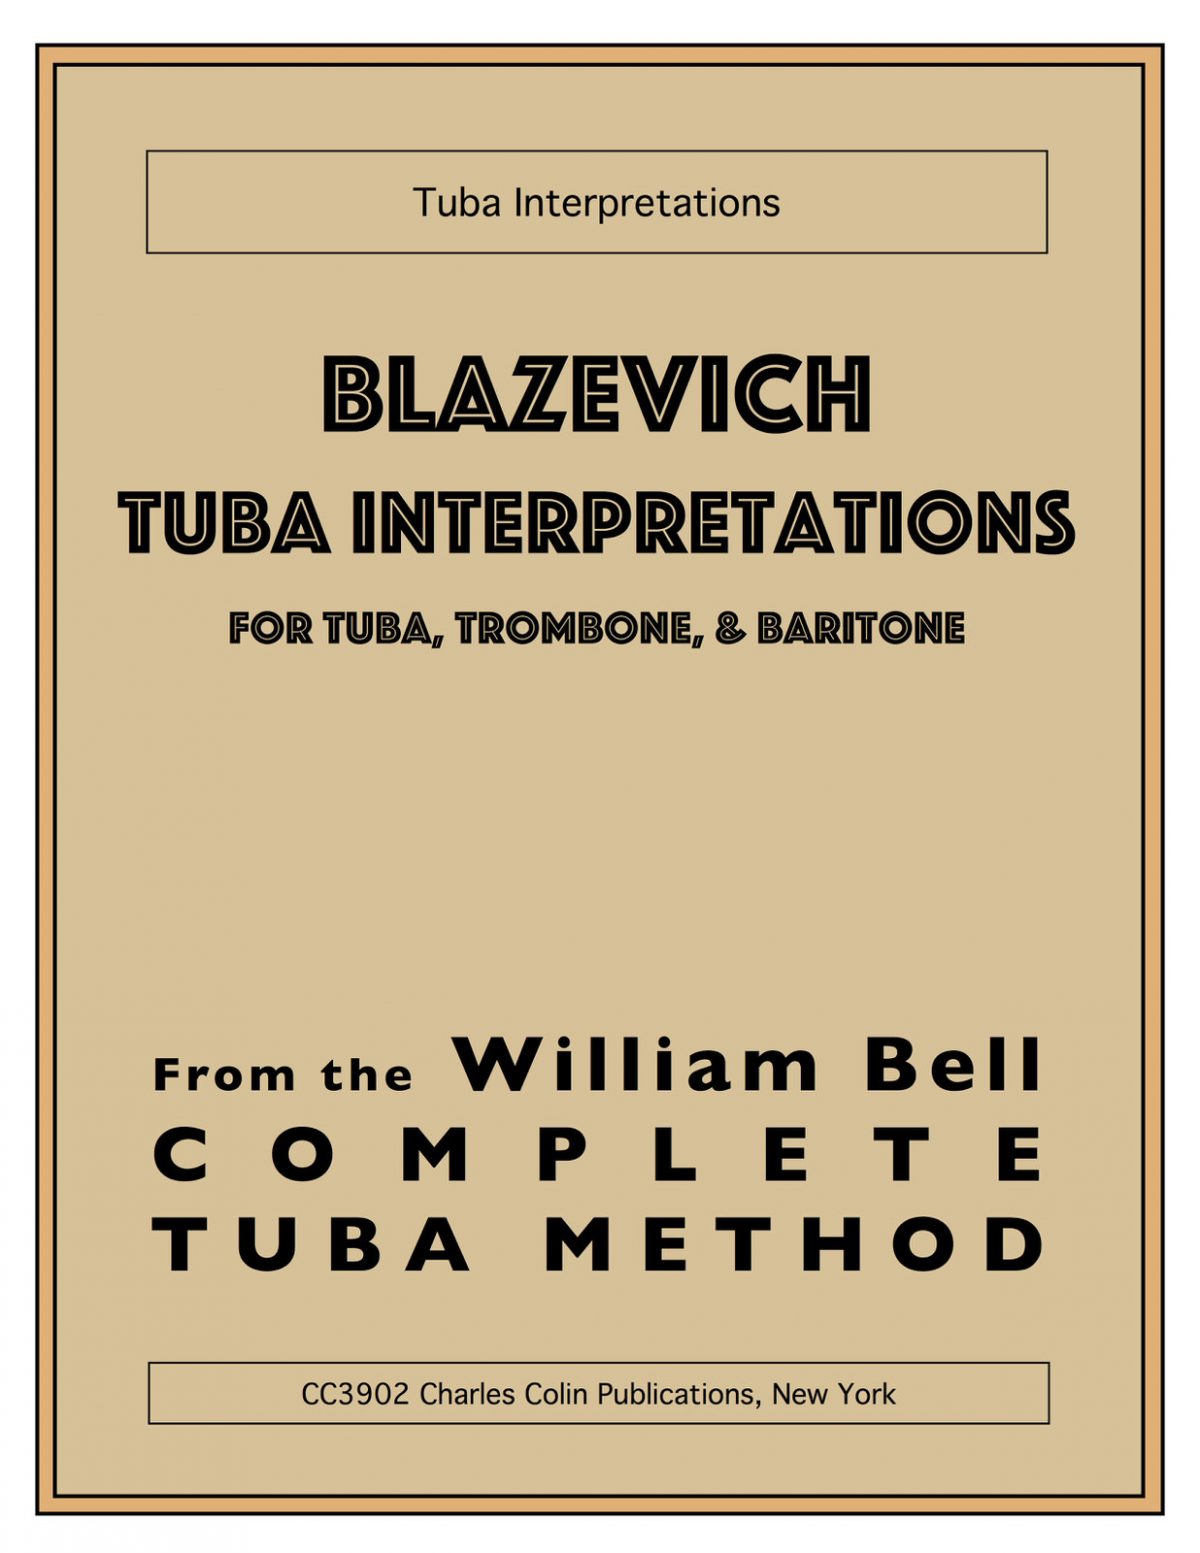 Bell, Blazevich Tuba Interpretations (keep copyrights)-p01